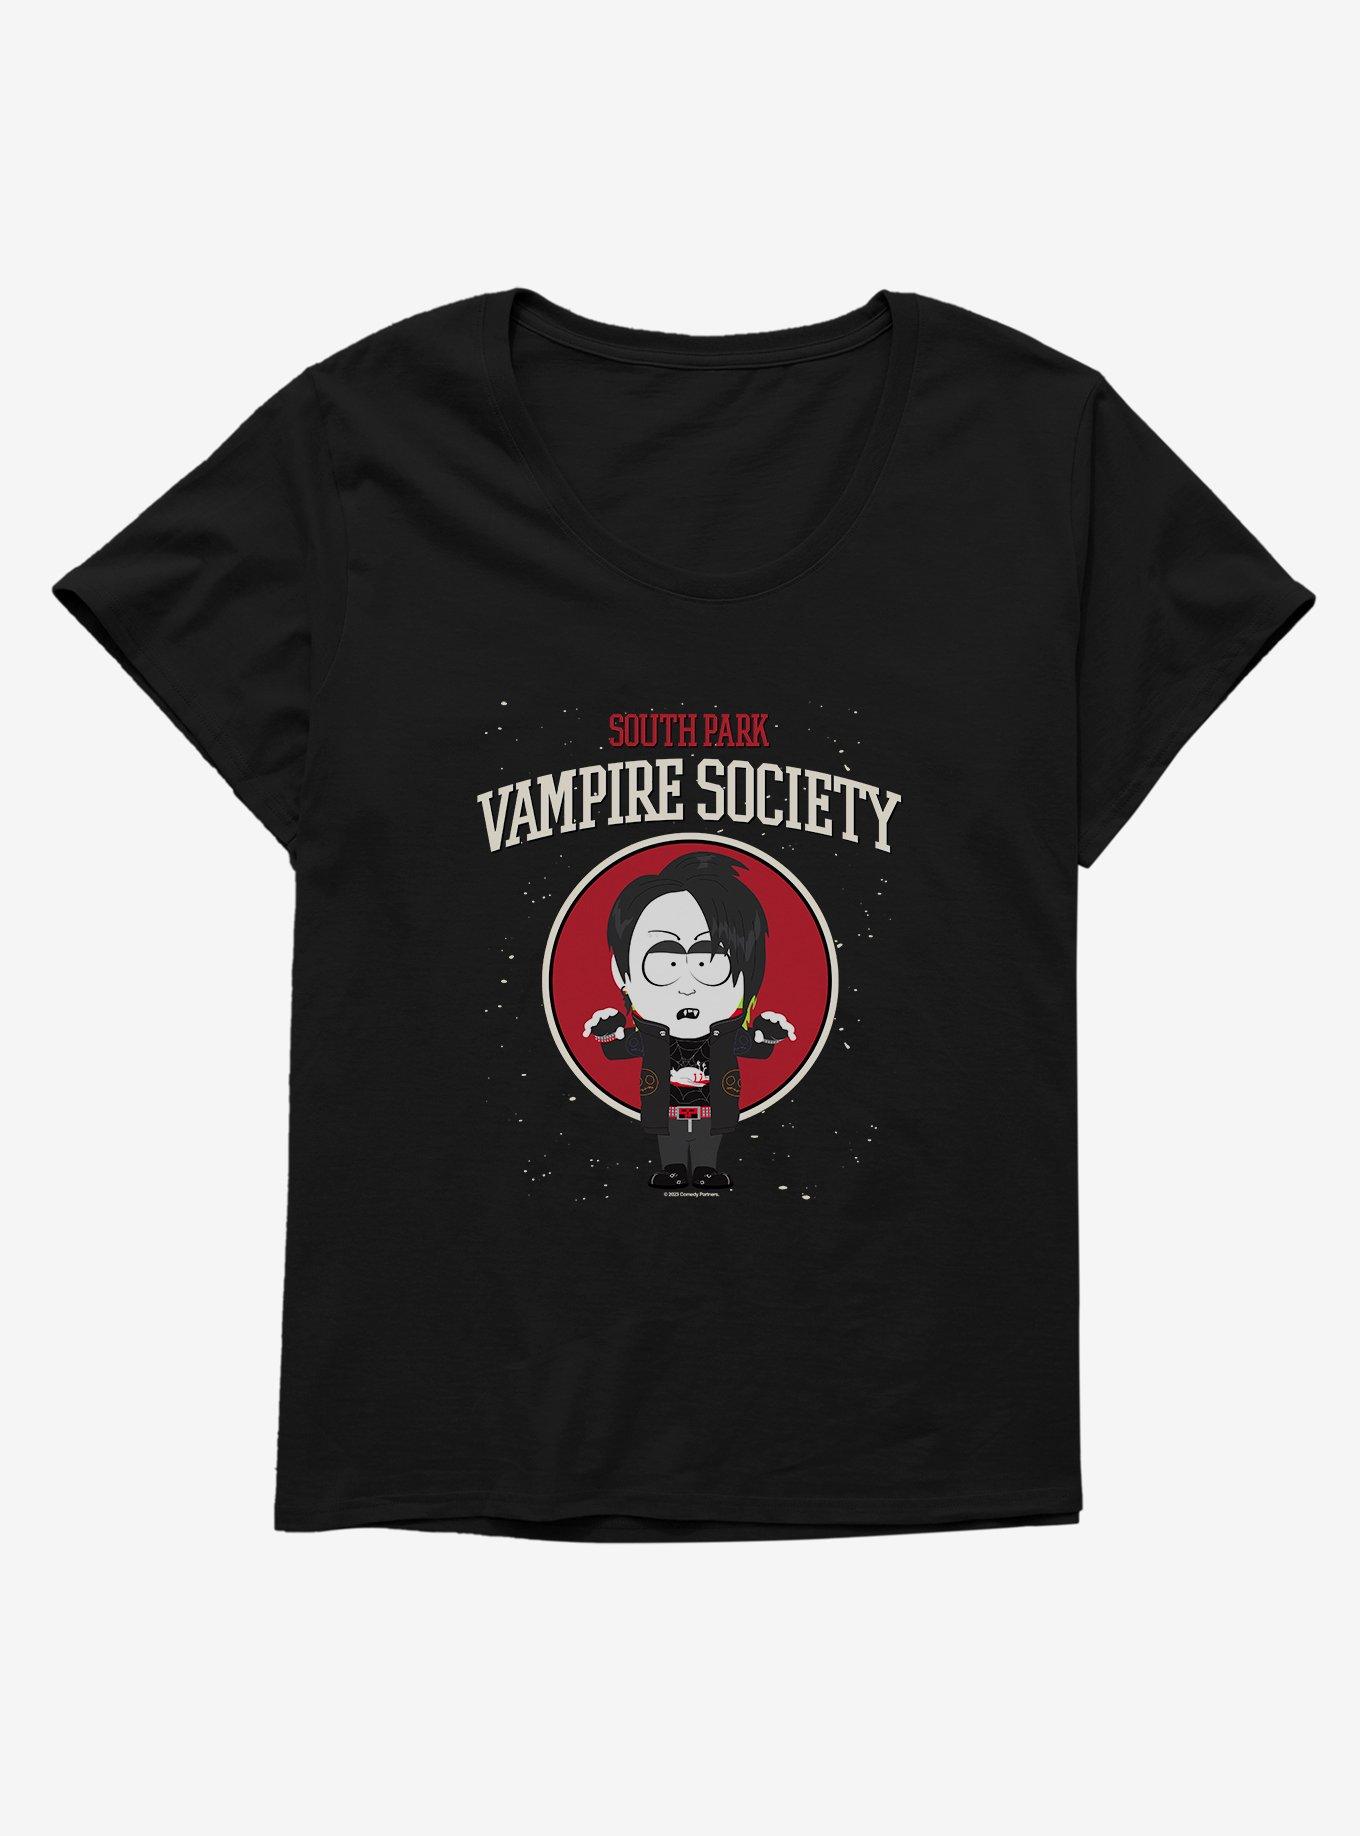 South Park Vampire Society Girls T-Shirt Plus Size, BLACK, hi-res